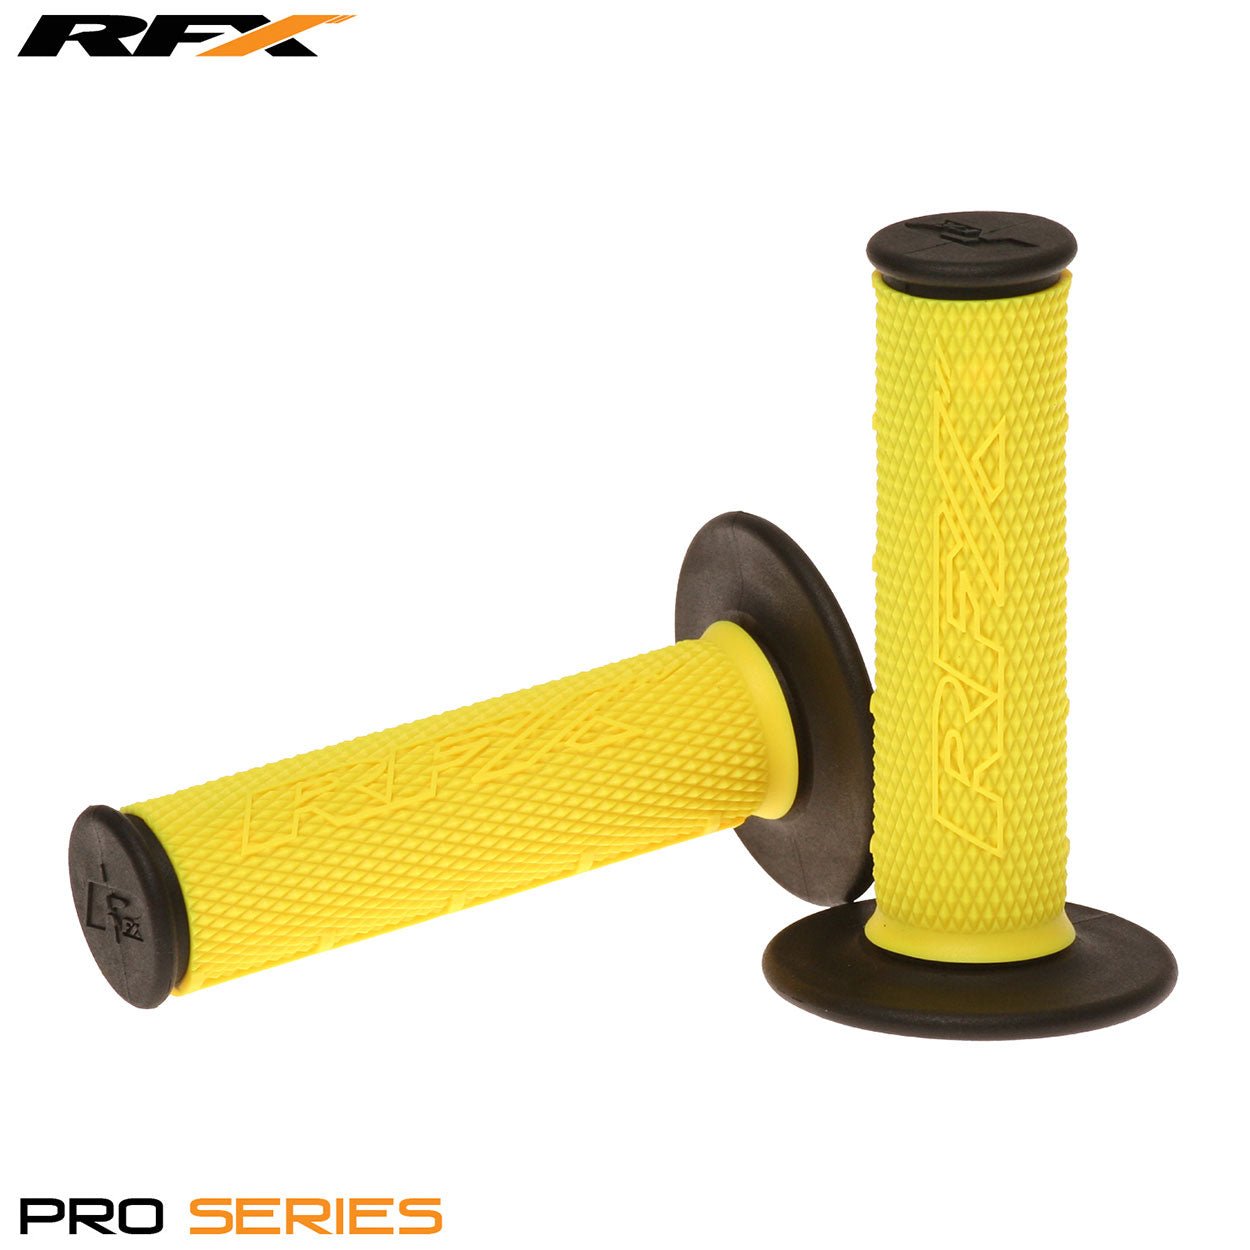 RFX Pro Series Dual Compound Grips Black Ends (Yellow/Black) Pair - Yellow - RFX